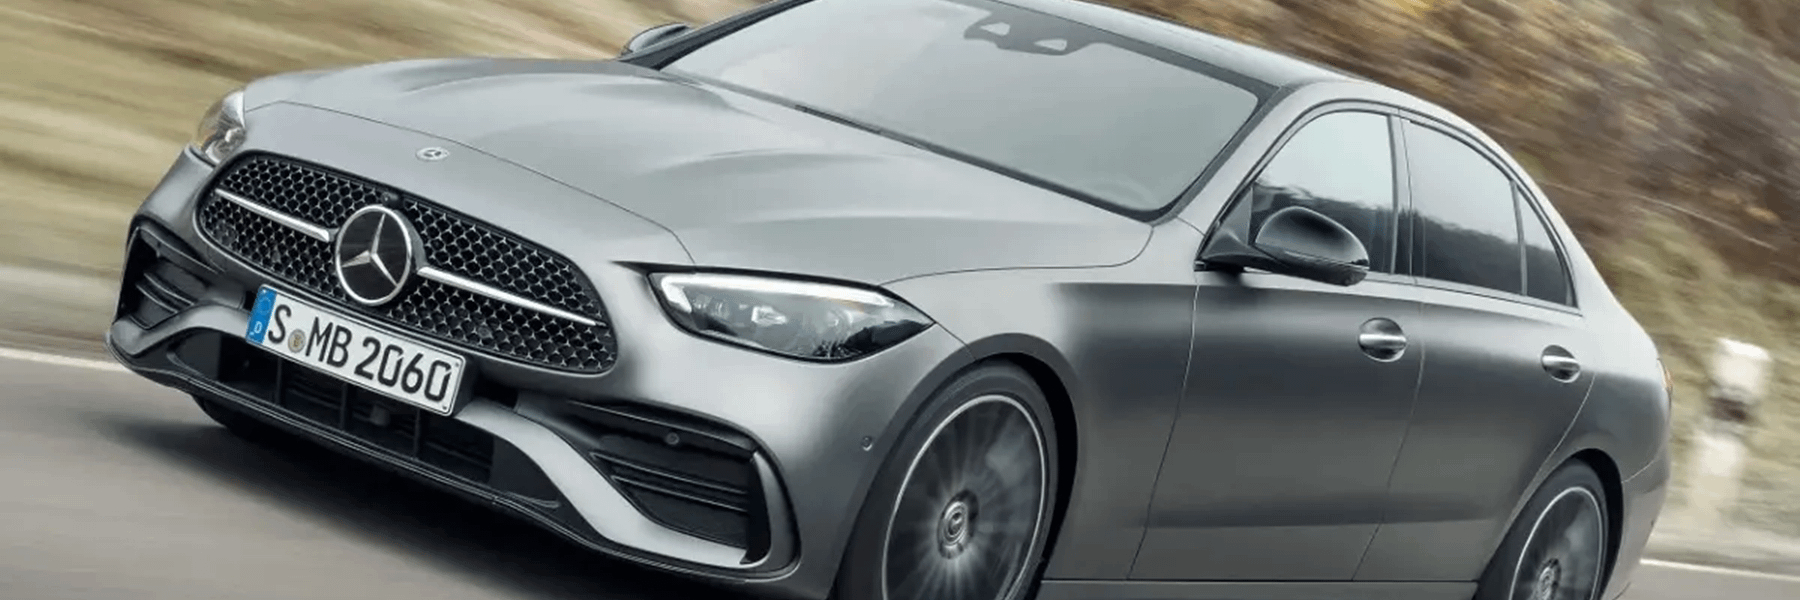 Mercedes-Benz C-Class Dimensions 2022 - Length, Width, Height